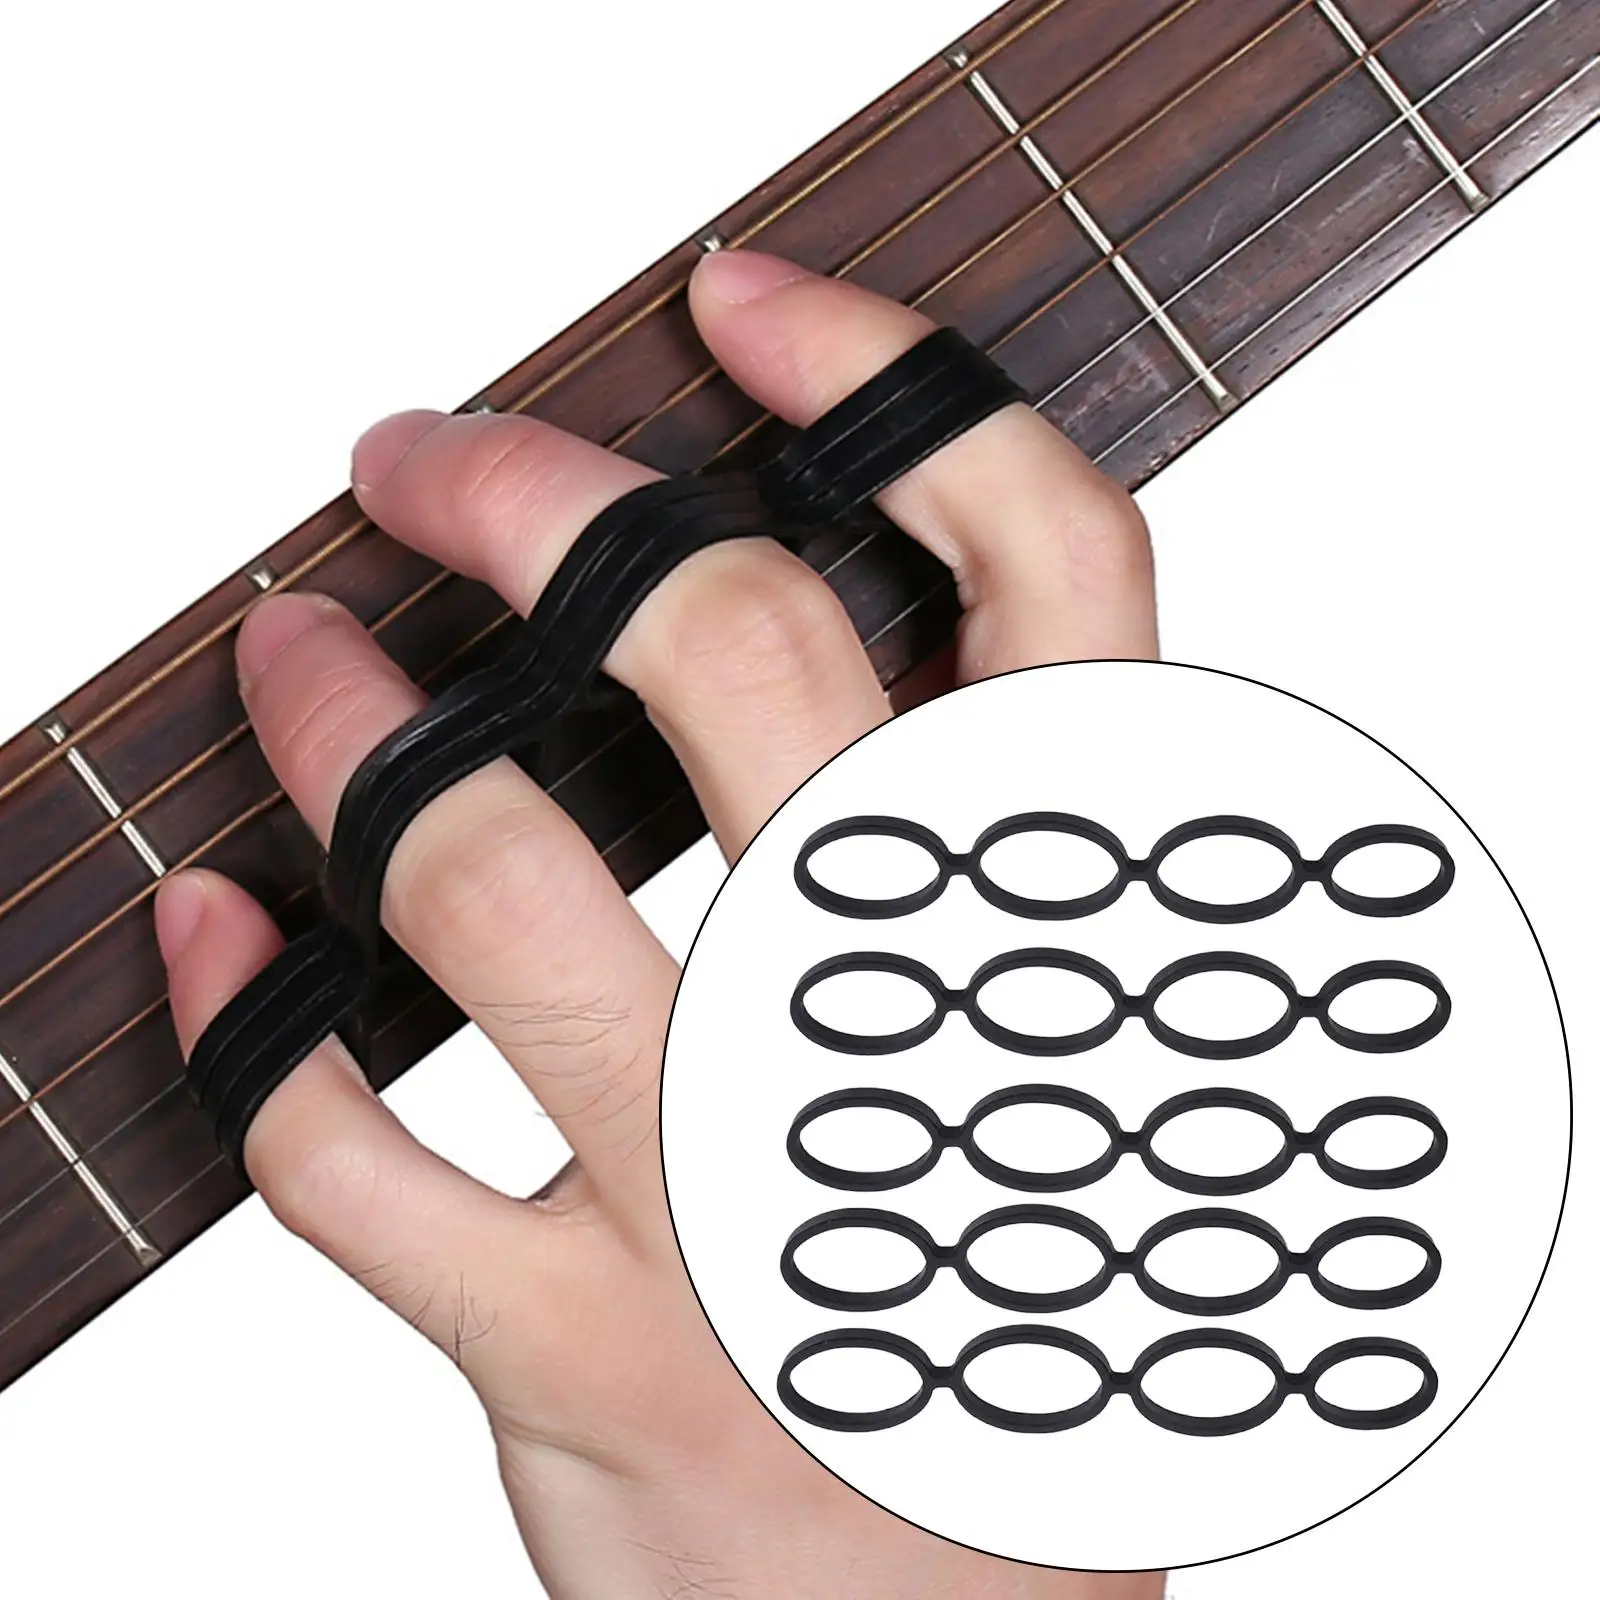 Finger Strengthener Portable Finger Exerciser Force Span Practing Resistance Training Bands for Strings Musical Instruments